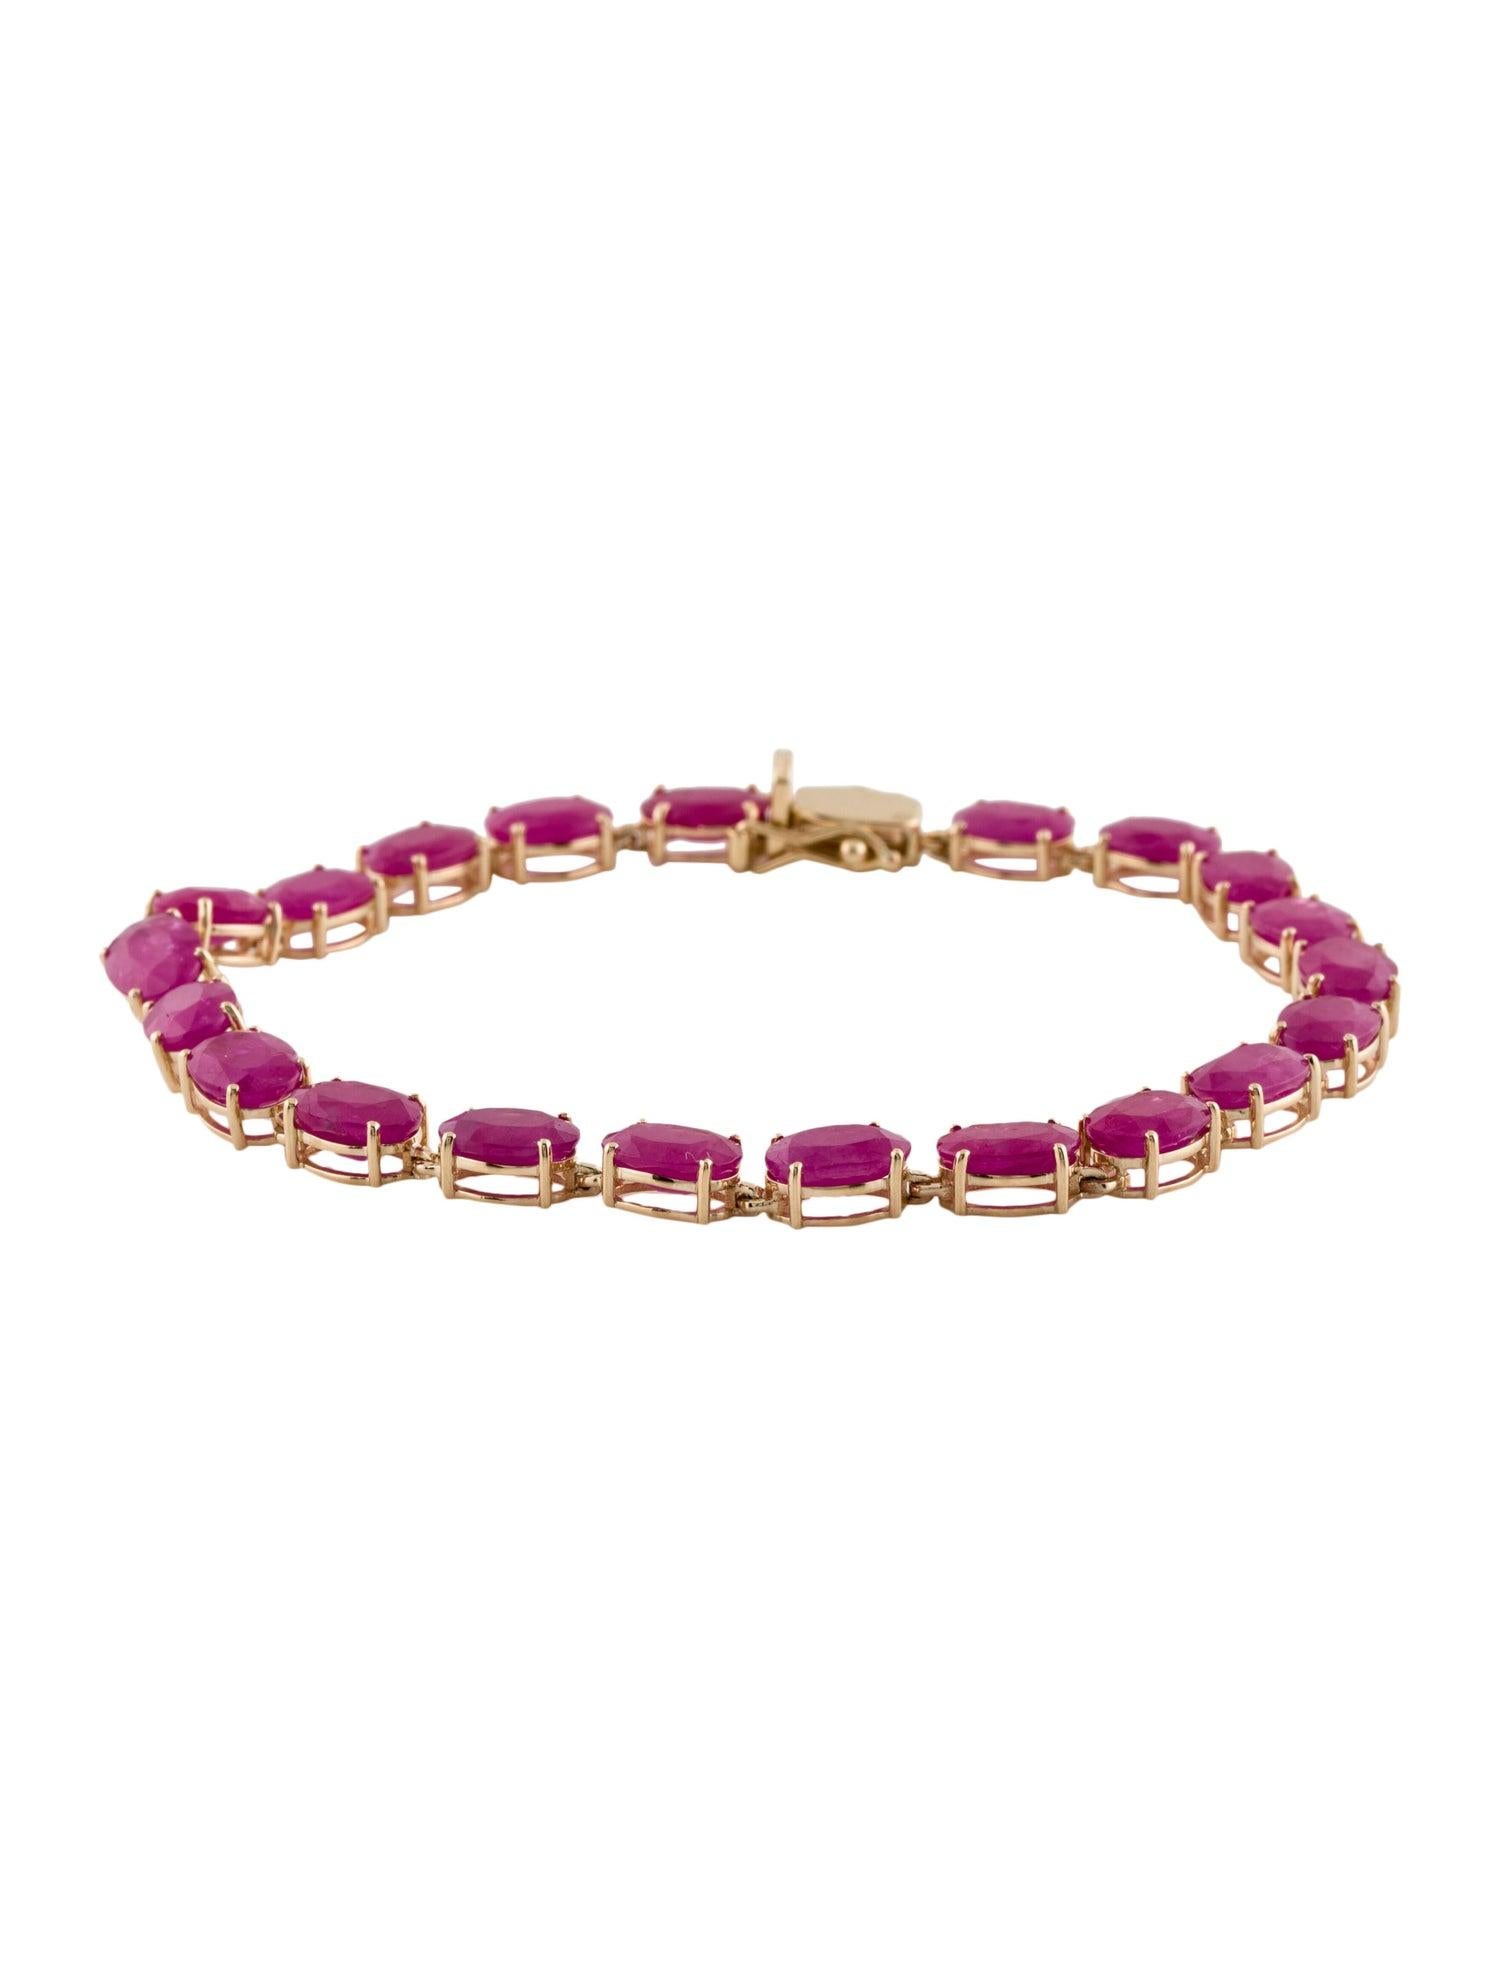 Brilliant Cut 14K 19.13ctw Ruby Tennis Bracelet - Exquisite Elegance, Timeless Luxury Design For Sale